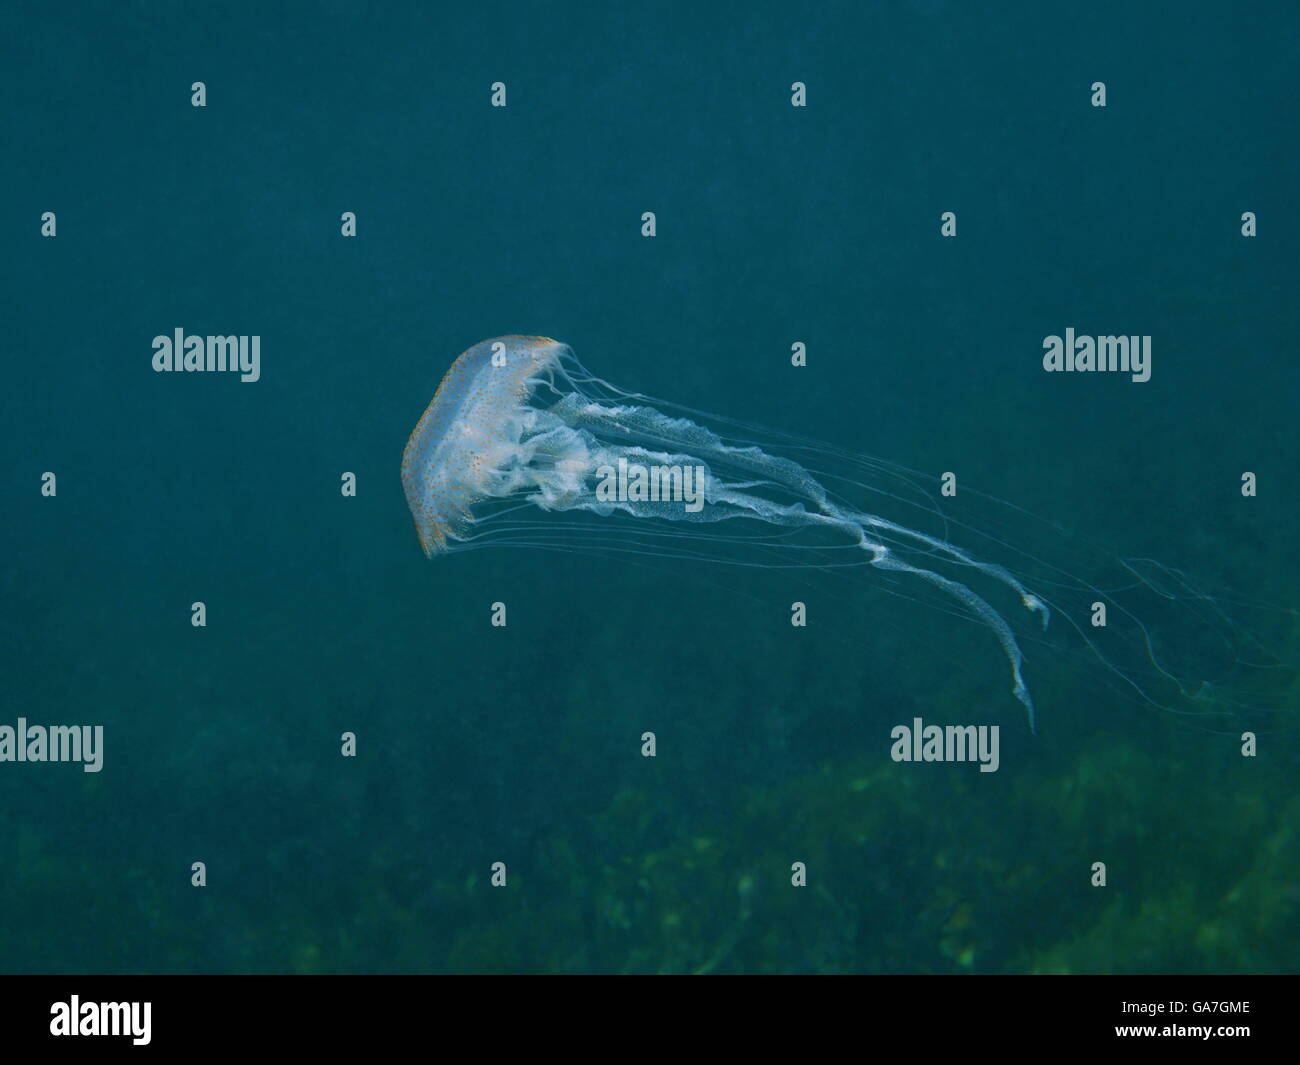 A jellyfish Pelagia noctiluca underwater in the Caribbean sea Stock Photo